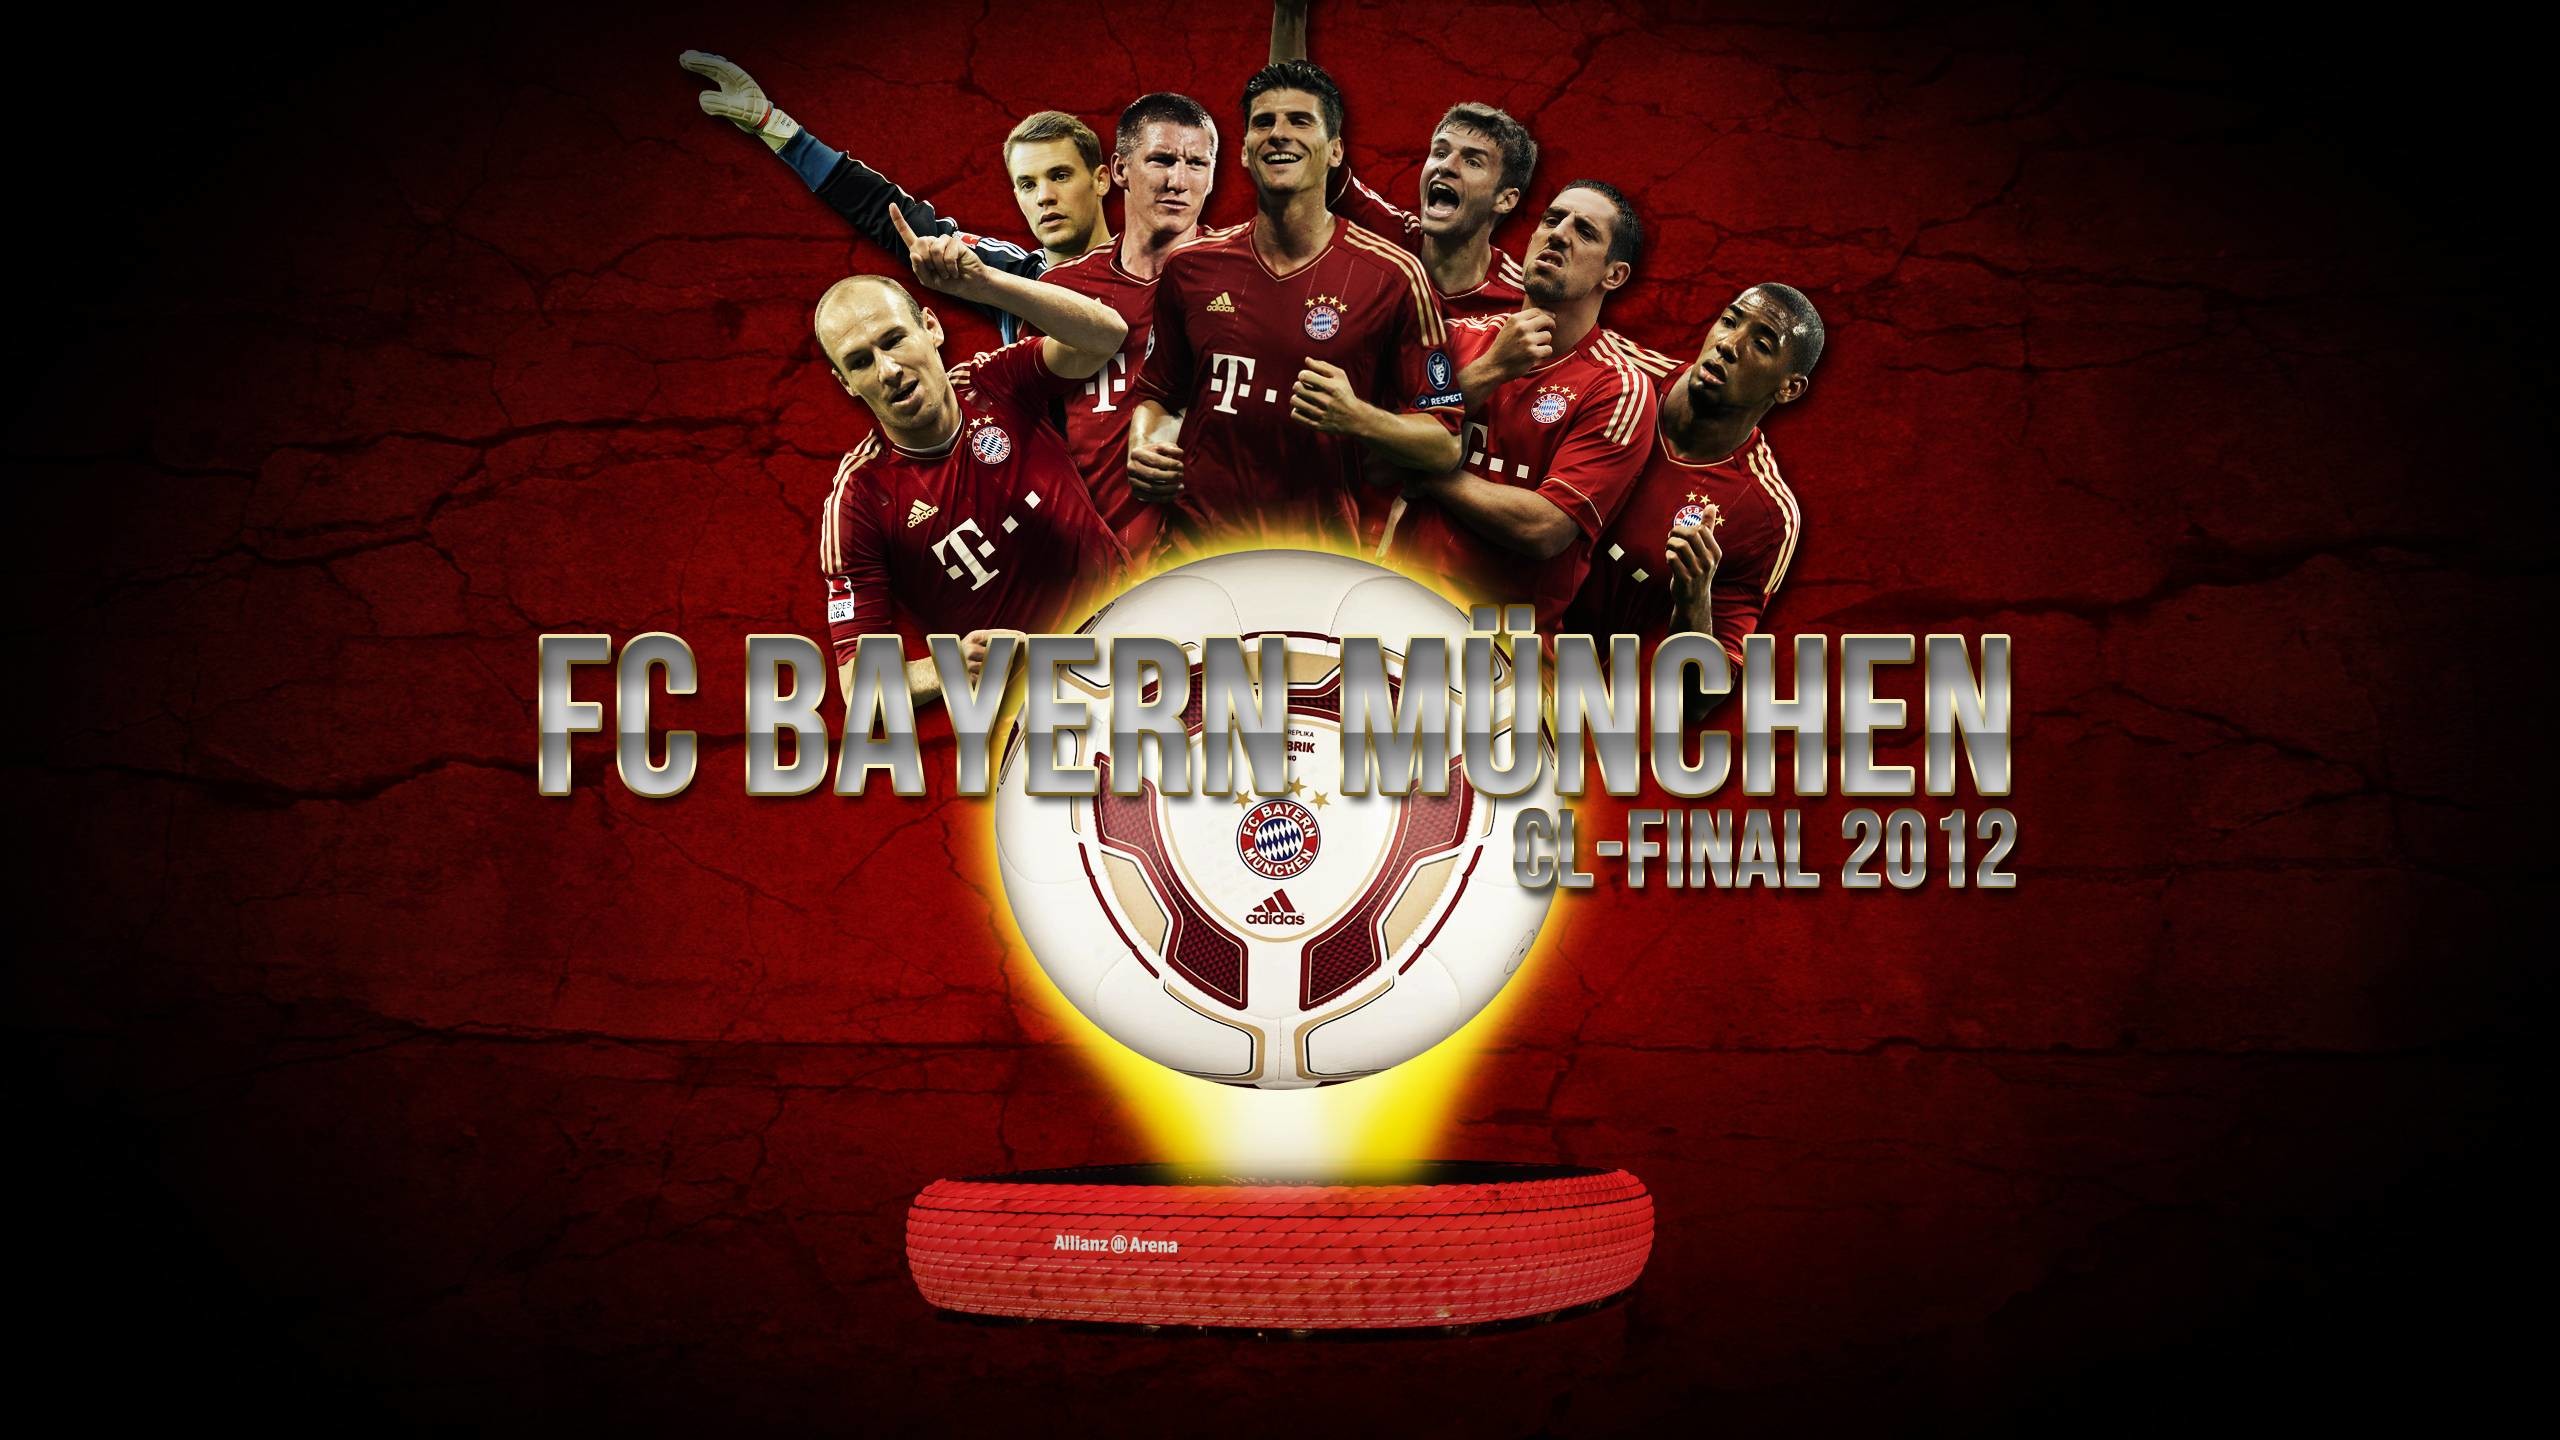 2560x1440 DeviantArt: More Like FC Bayern Munich Wallpaper JPG und PSD by Wybi